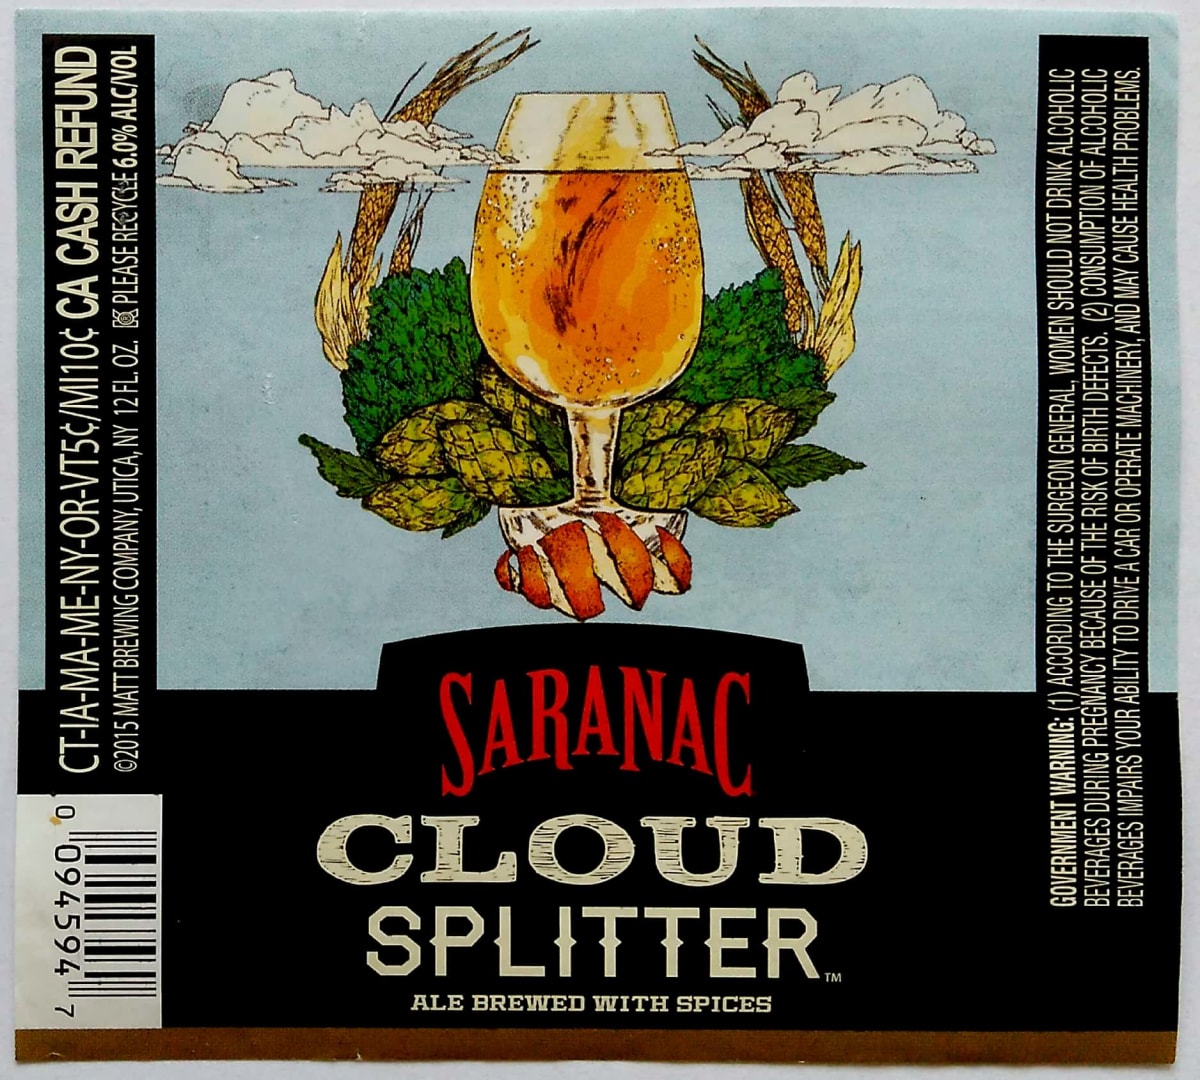 Saranac Cloud Splitter